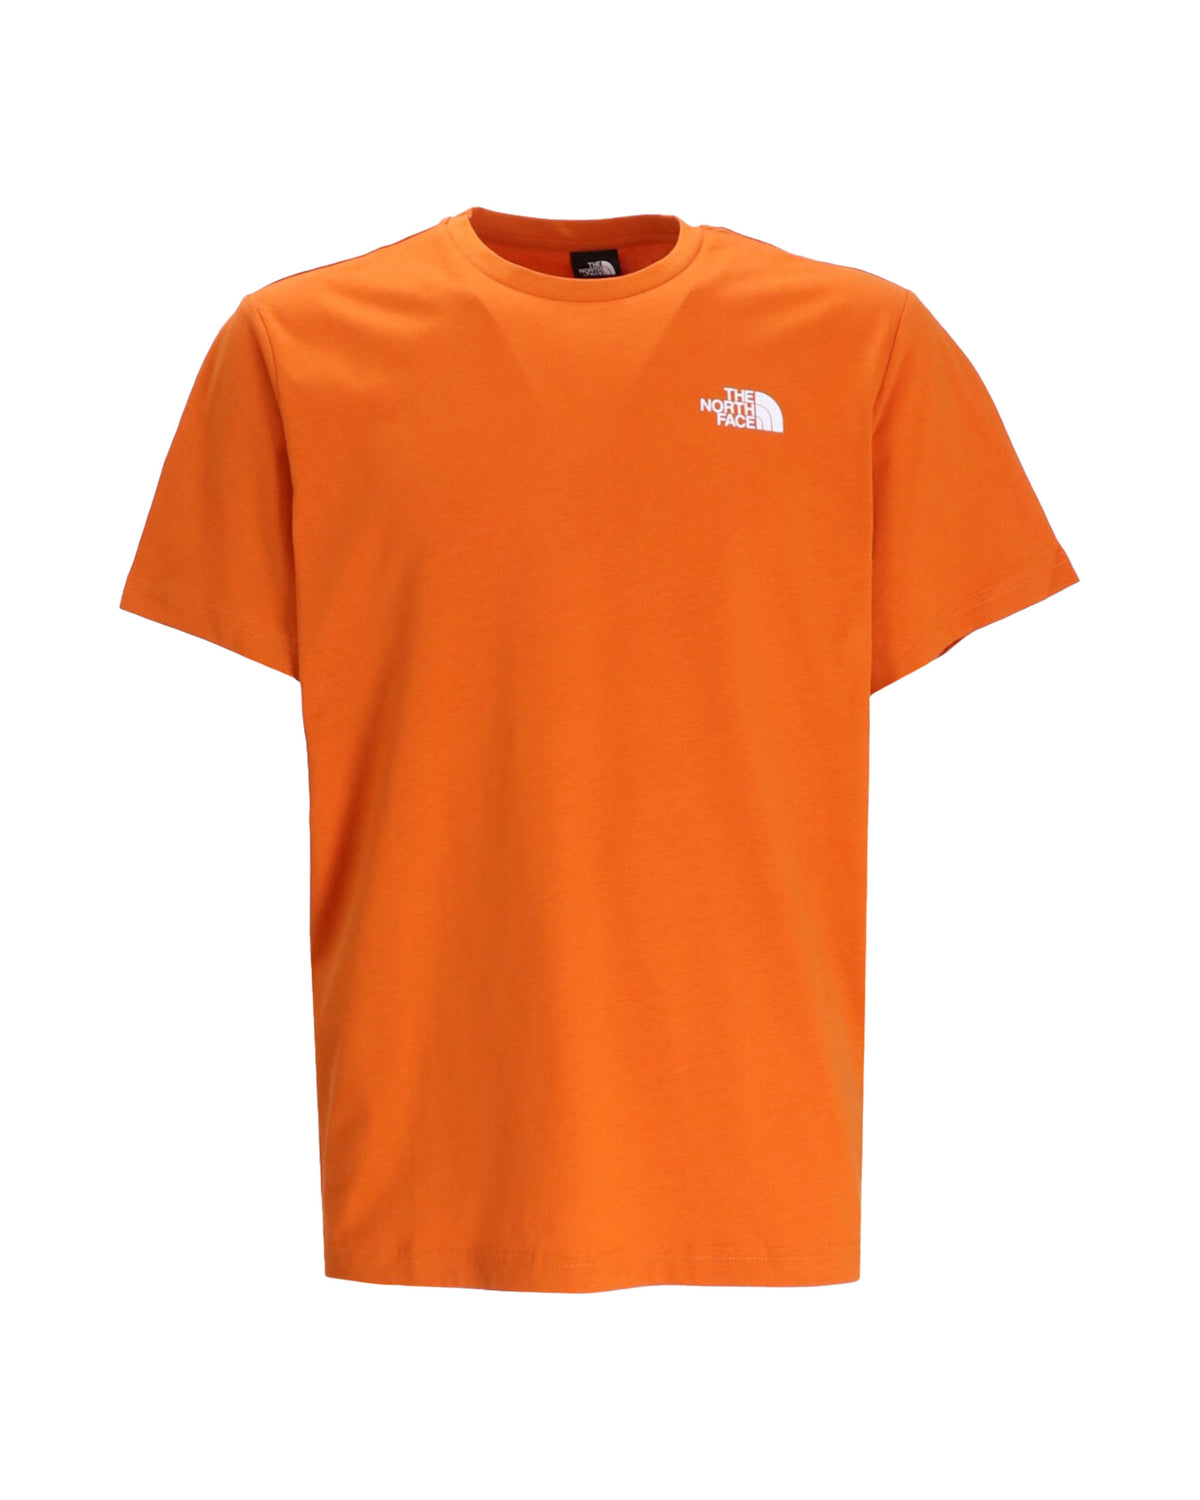 T-Shirt Uomo The North Face Redbox Arancione